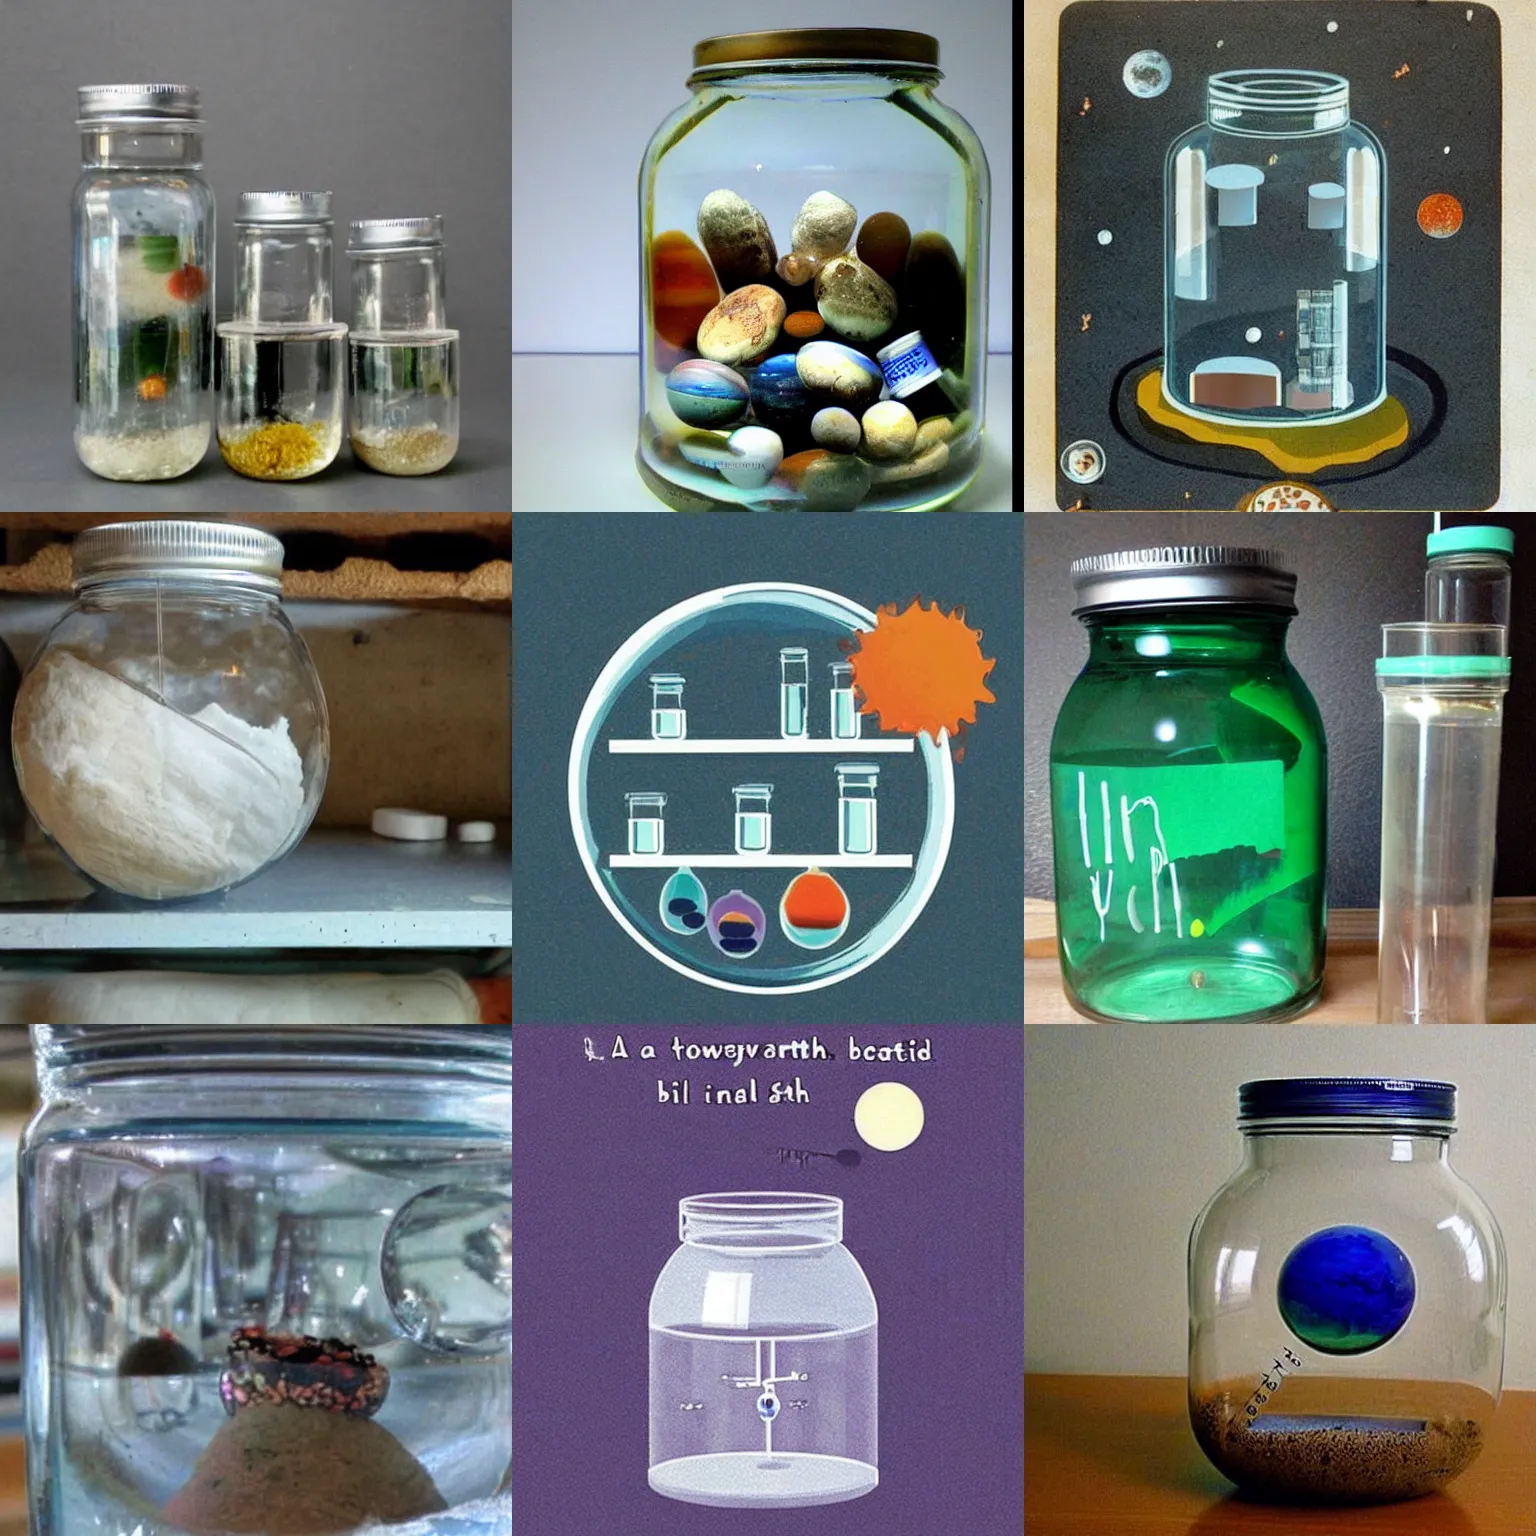 Prompt: a laboratory, jar on a shelf, inside the jar is a tiny!!!!!!!!!! planet earth